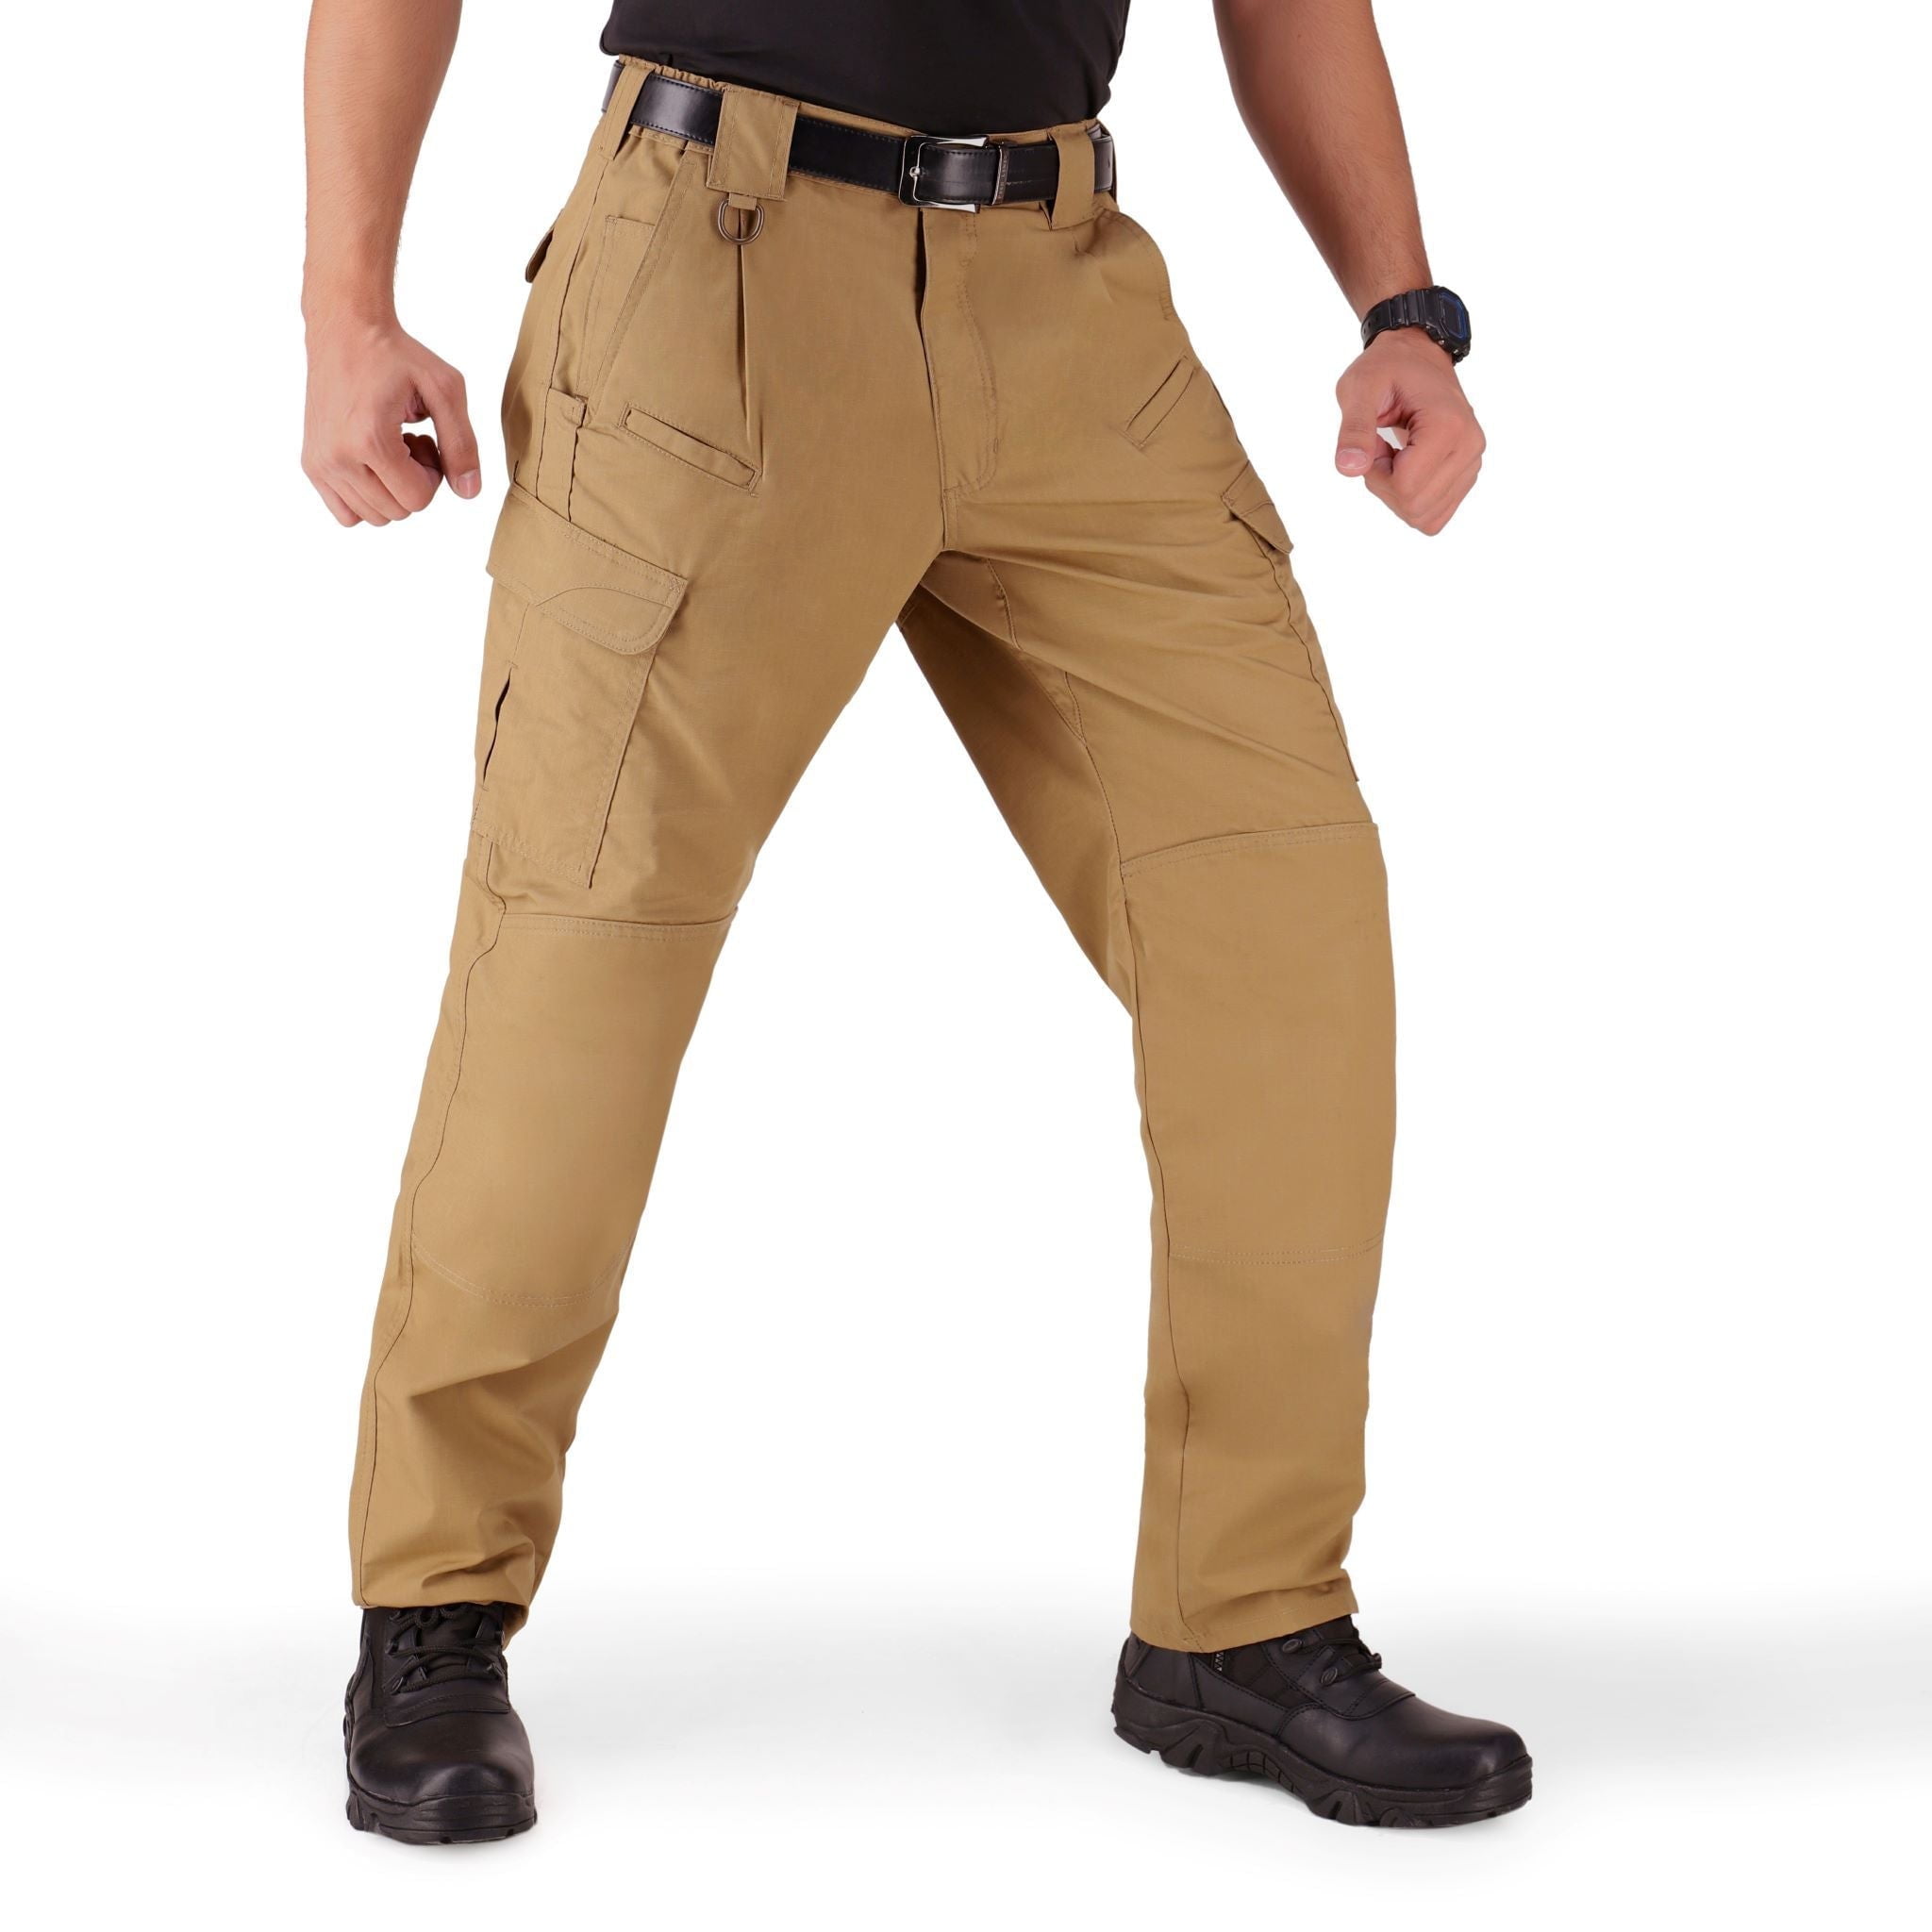 Blocker Outdoors Shield Series Koretec Polar Weight Bottom, Heavyweight Base  Layer Pants (Black, Medium) 